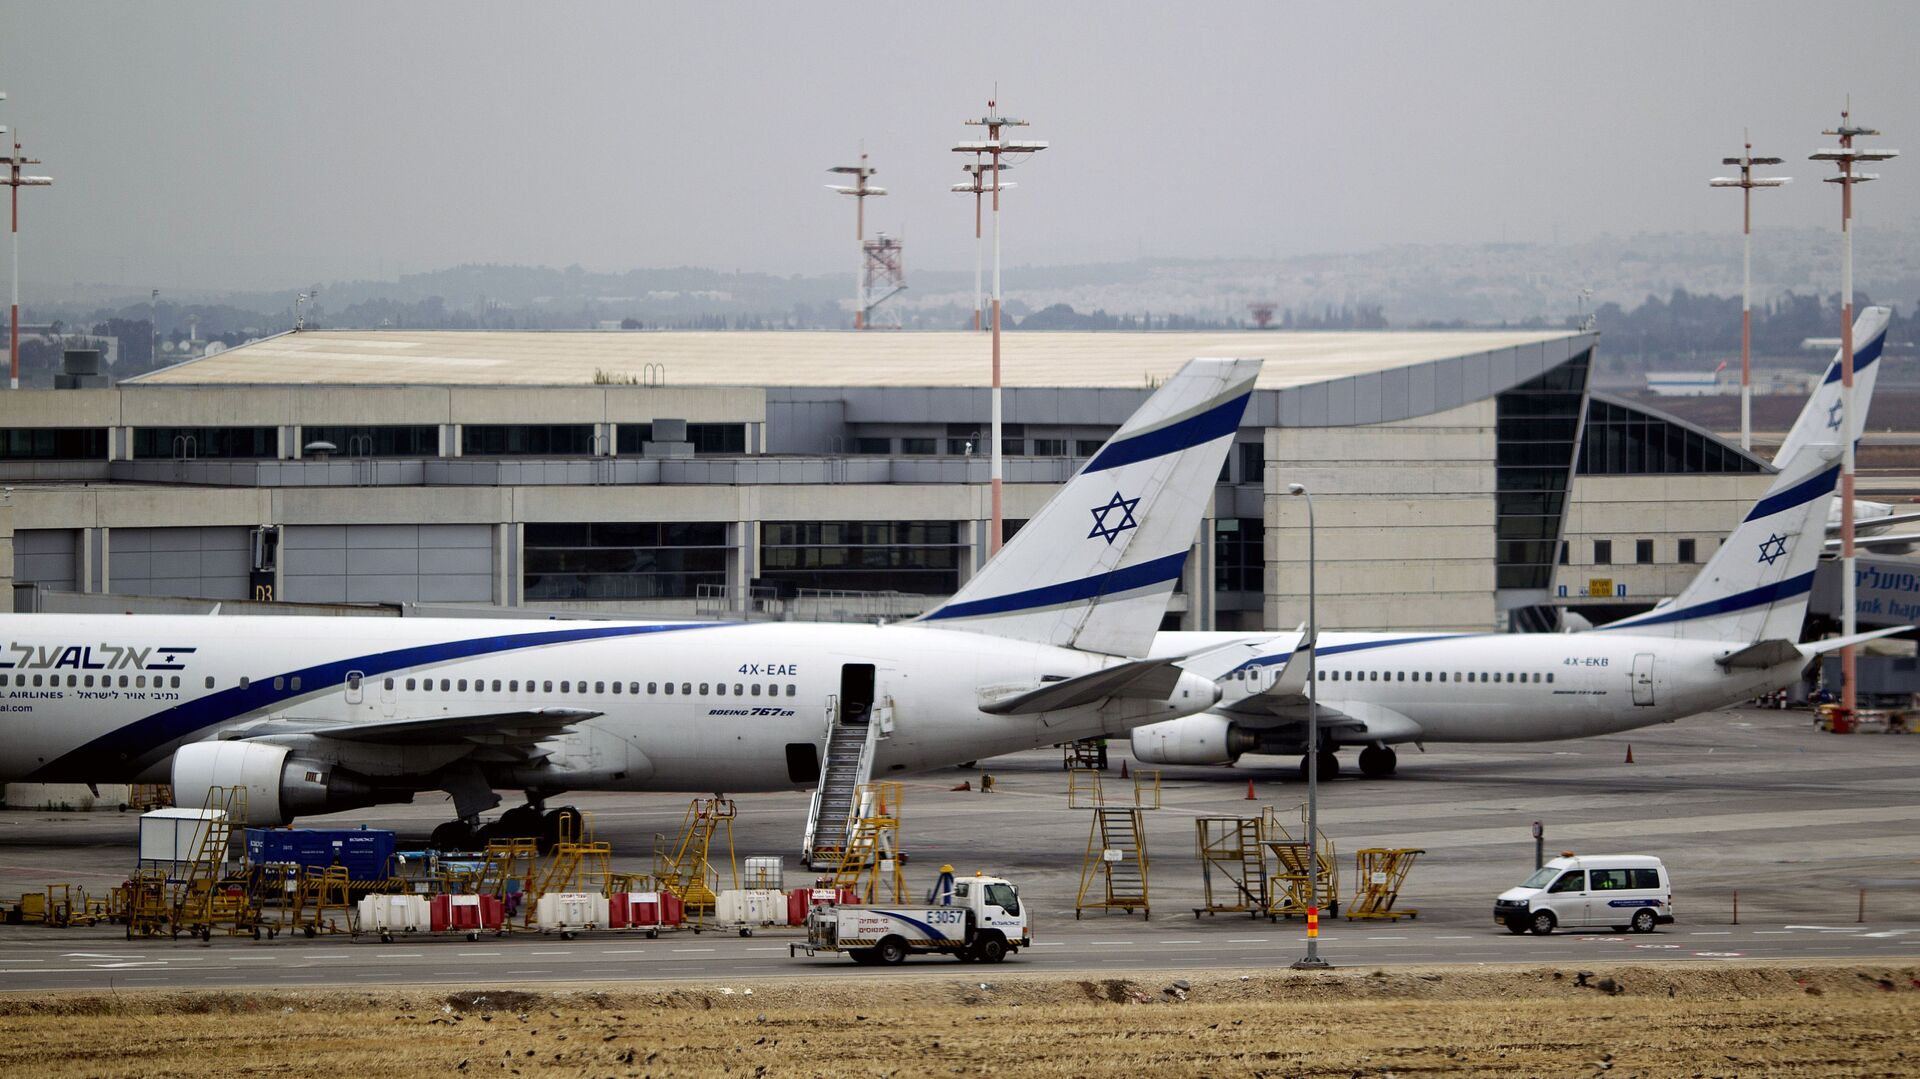 مطار بن غوريون الدولي في تل أبيب، إسرائيل 21 أبريل/ نيسان 2013 - سبوتنيك عربي, 1920, 31.08.2021